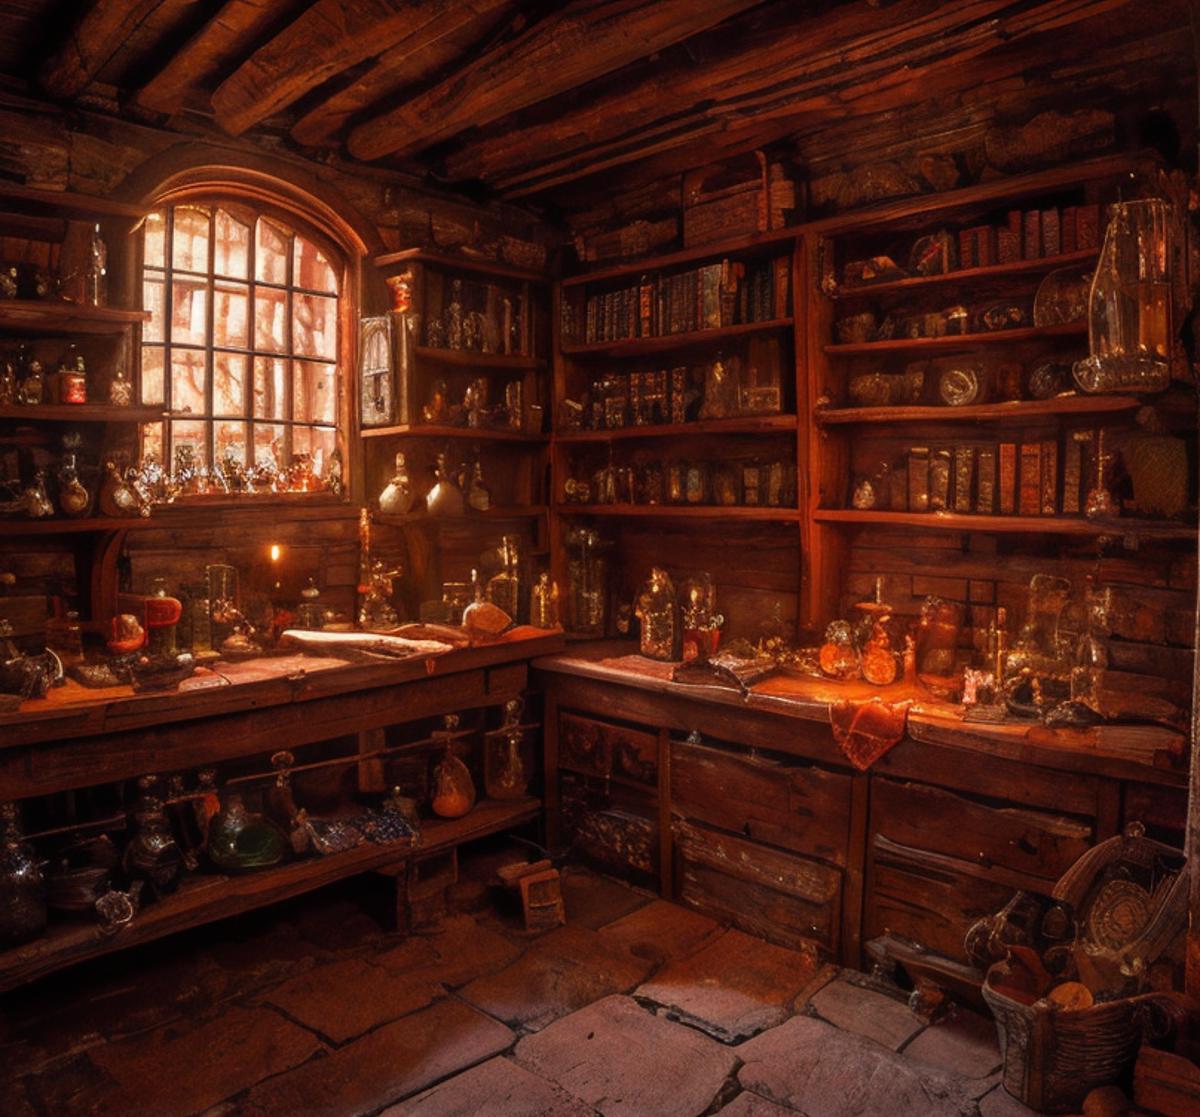 Fantasy Interiors image by ericheisner650